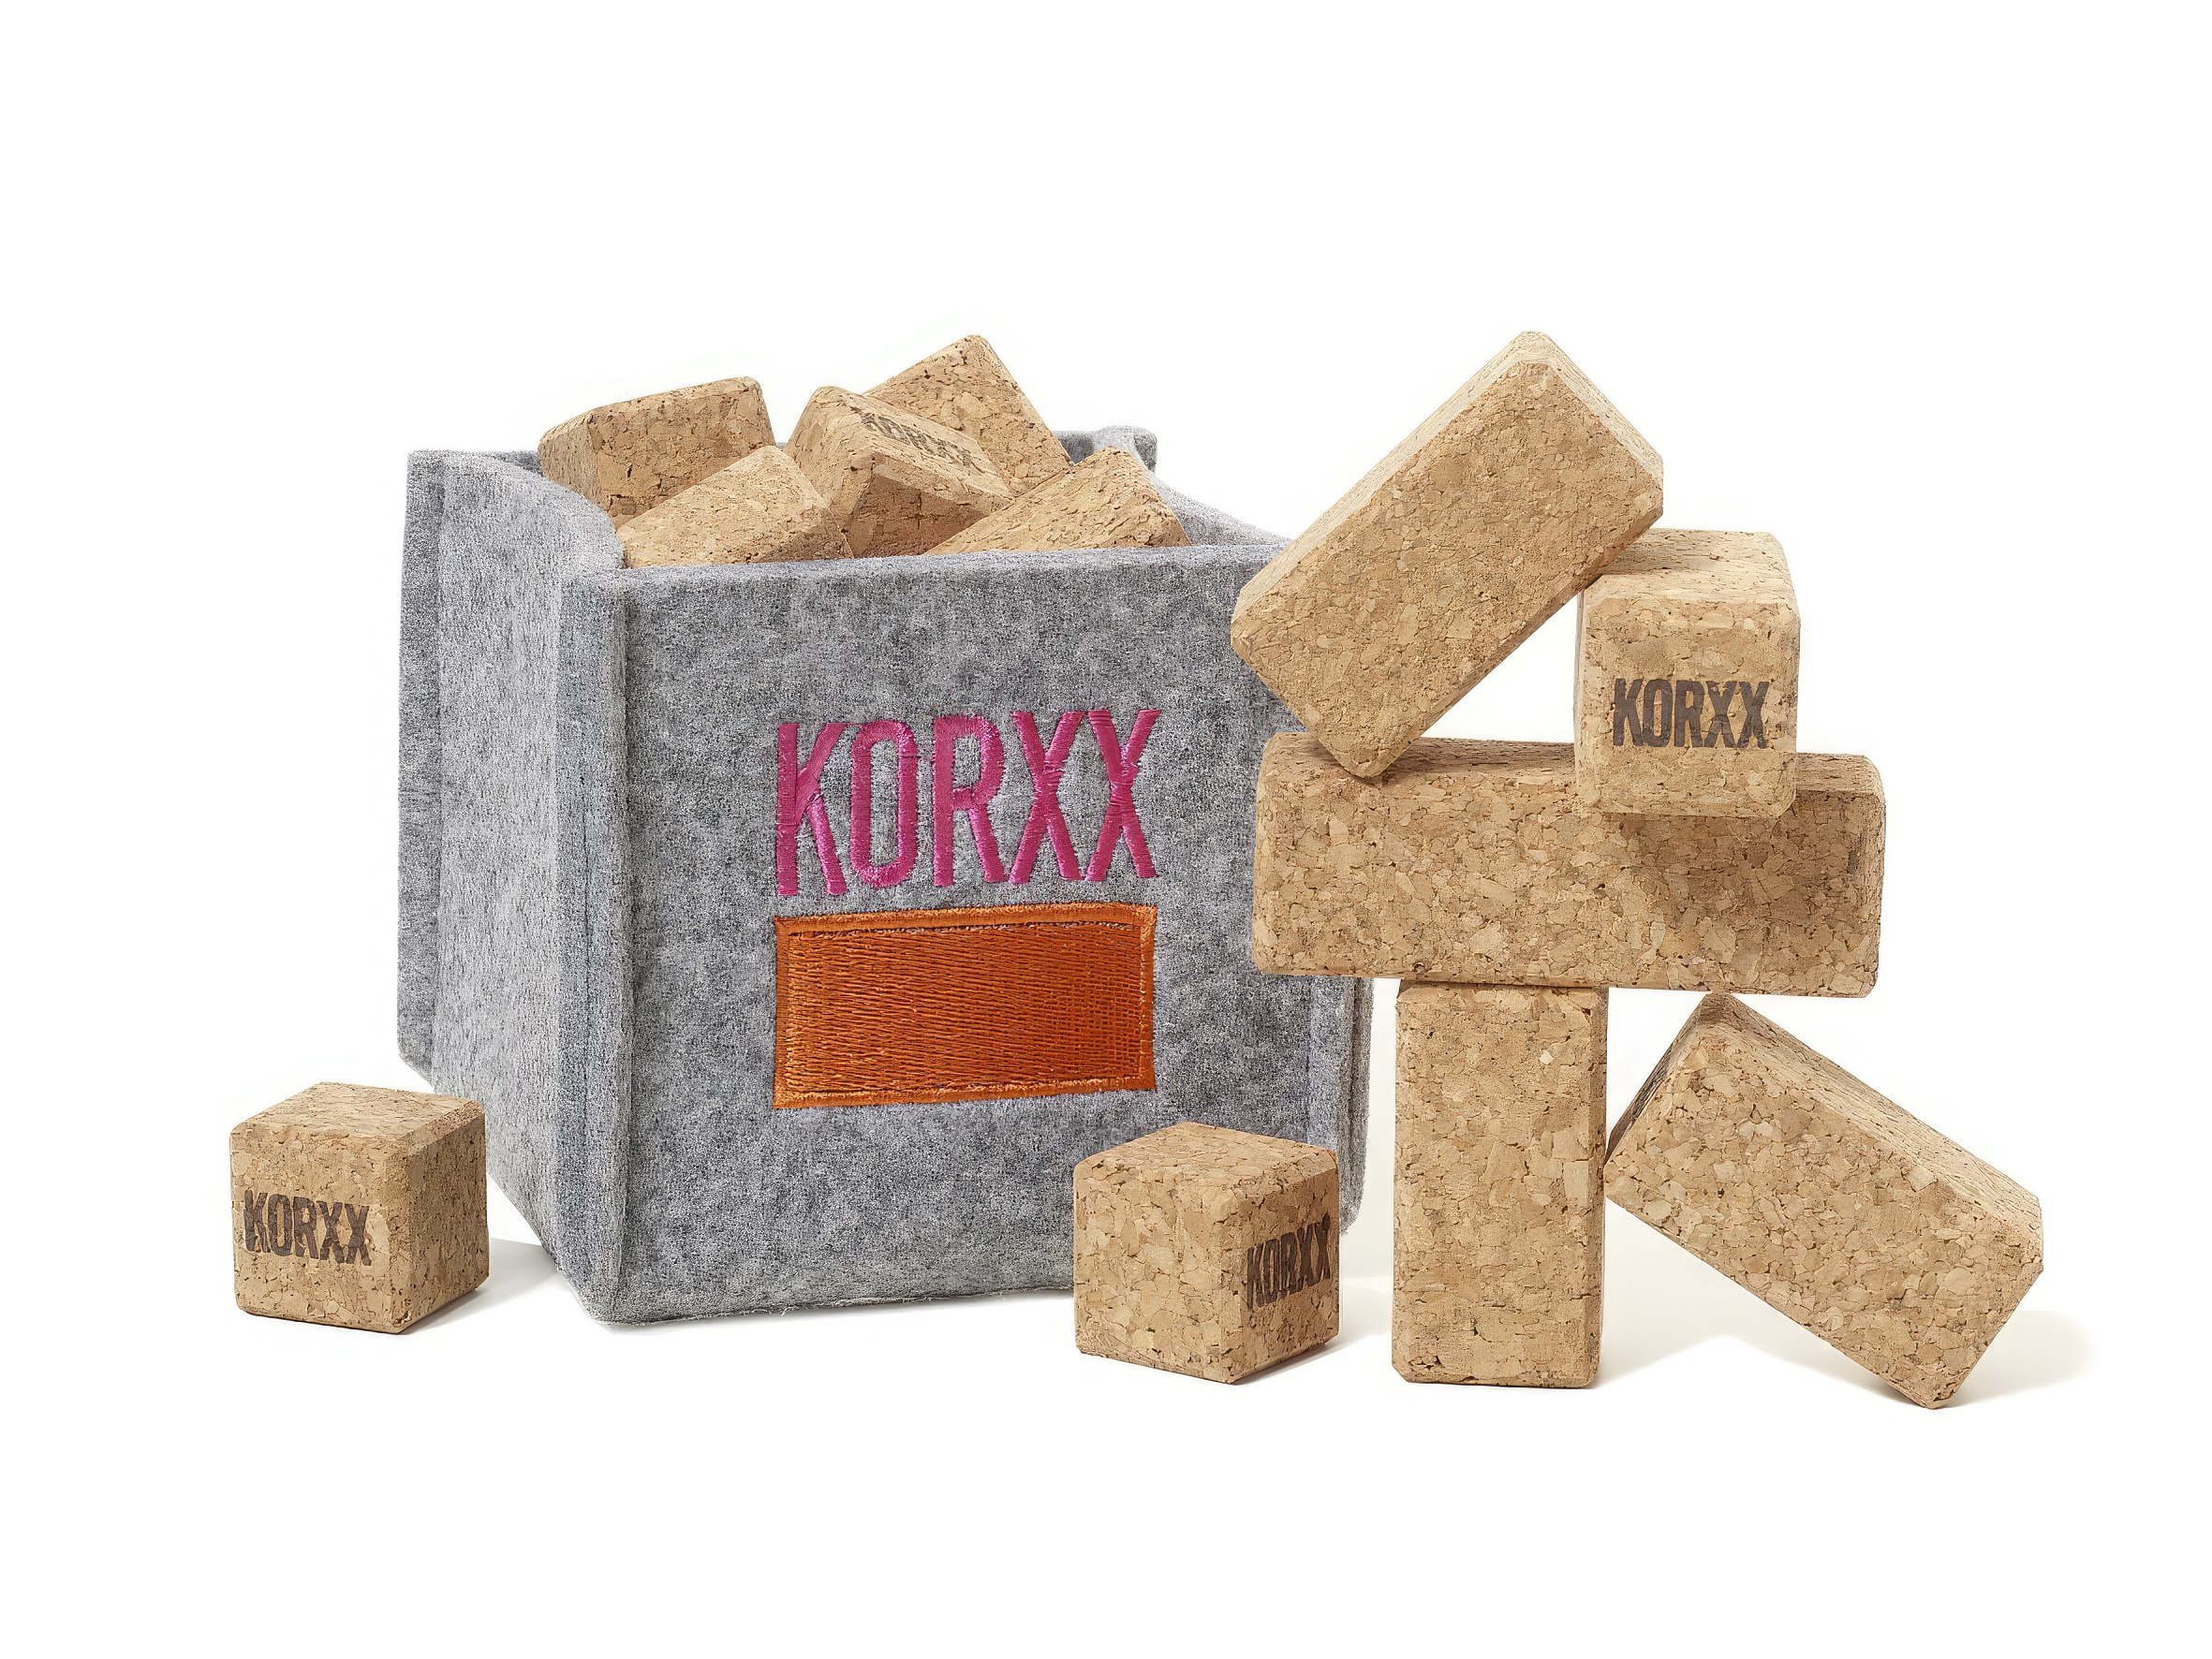 korxx_cork_toys_building_blocks_2-gigapixel-standard-scale-2_00x